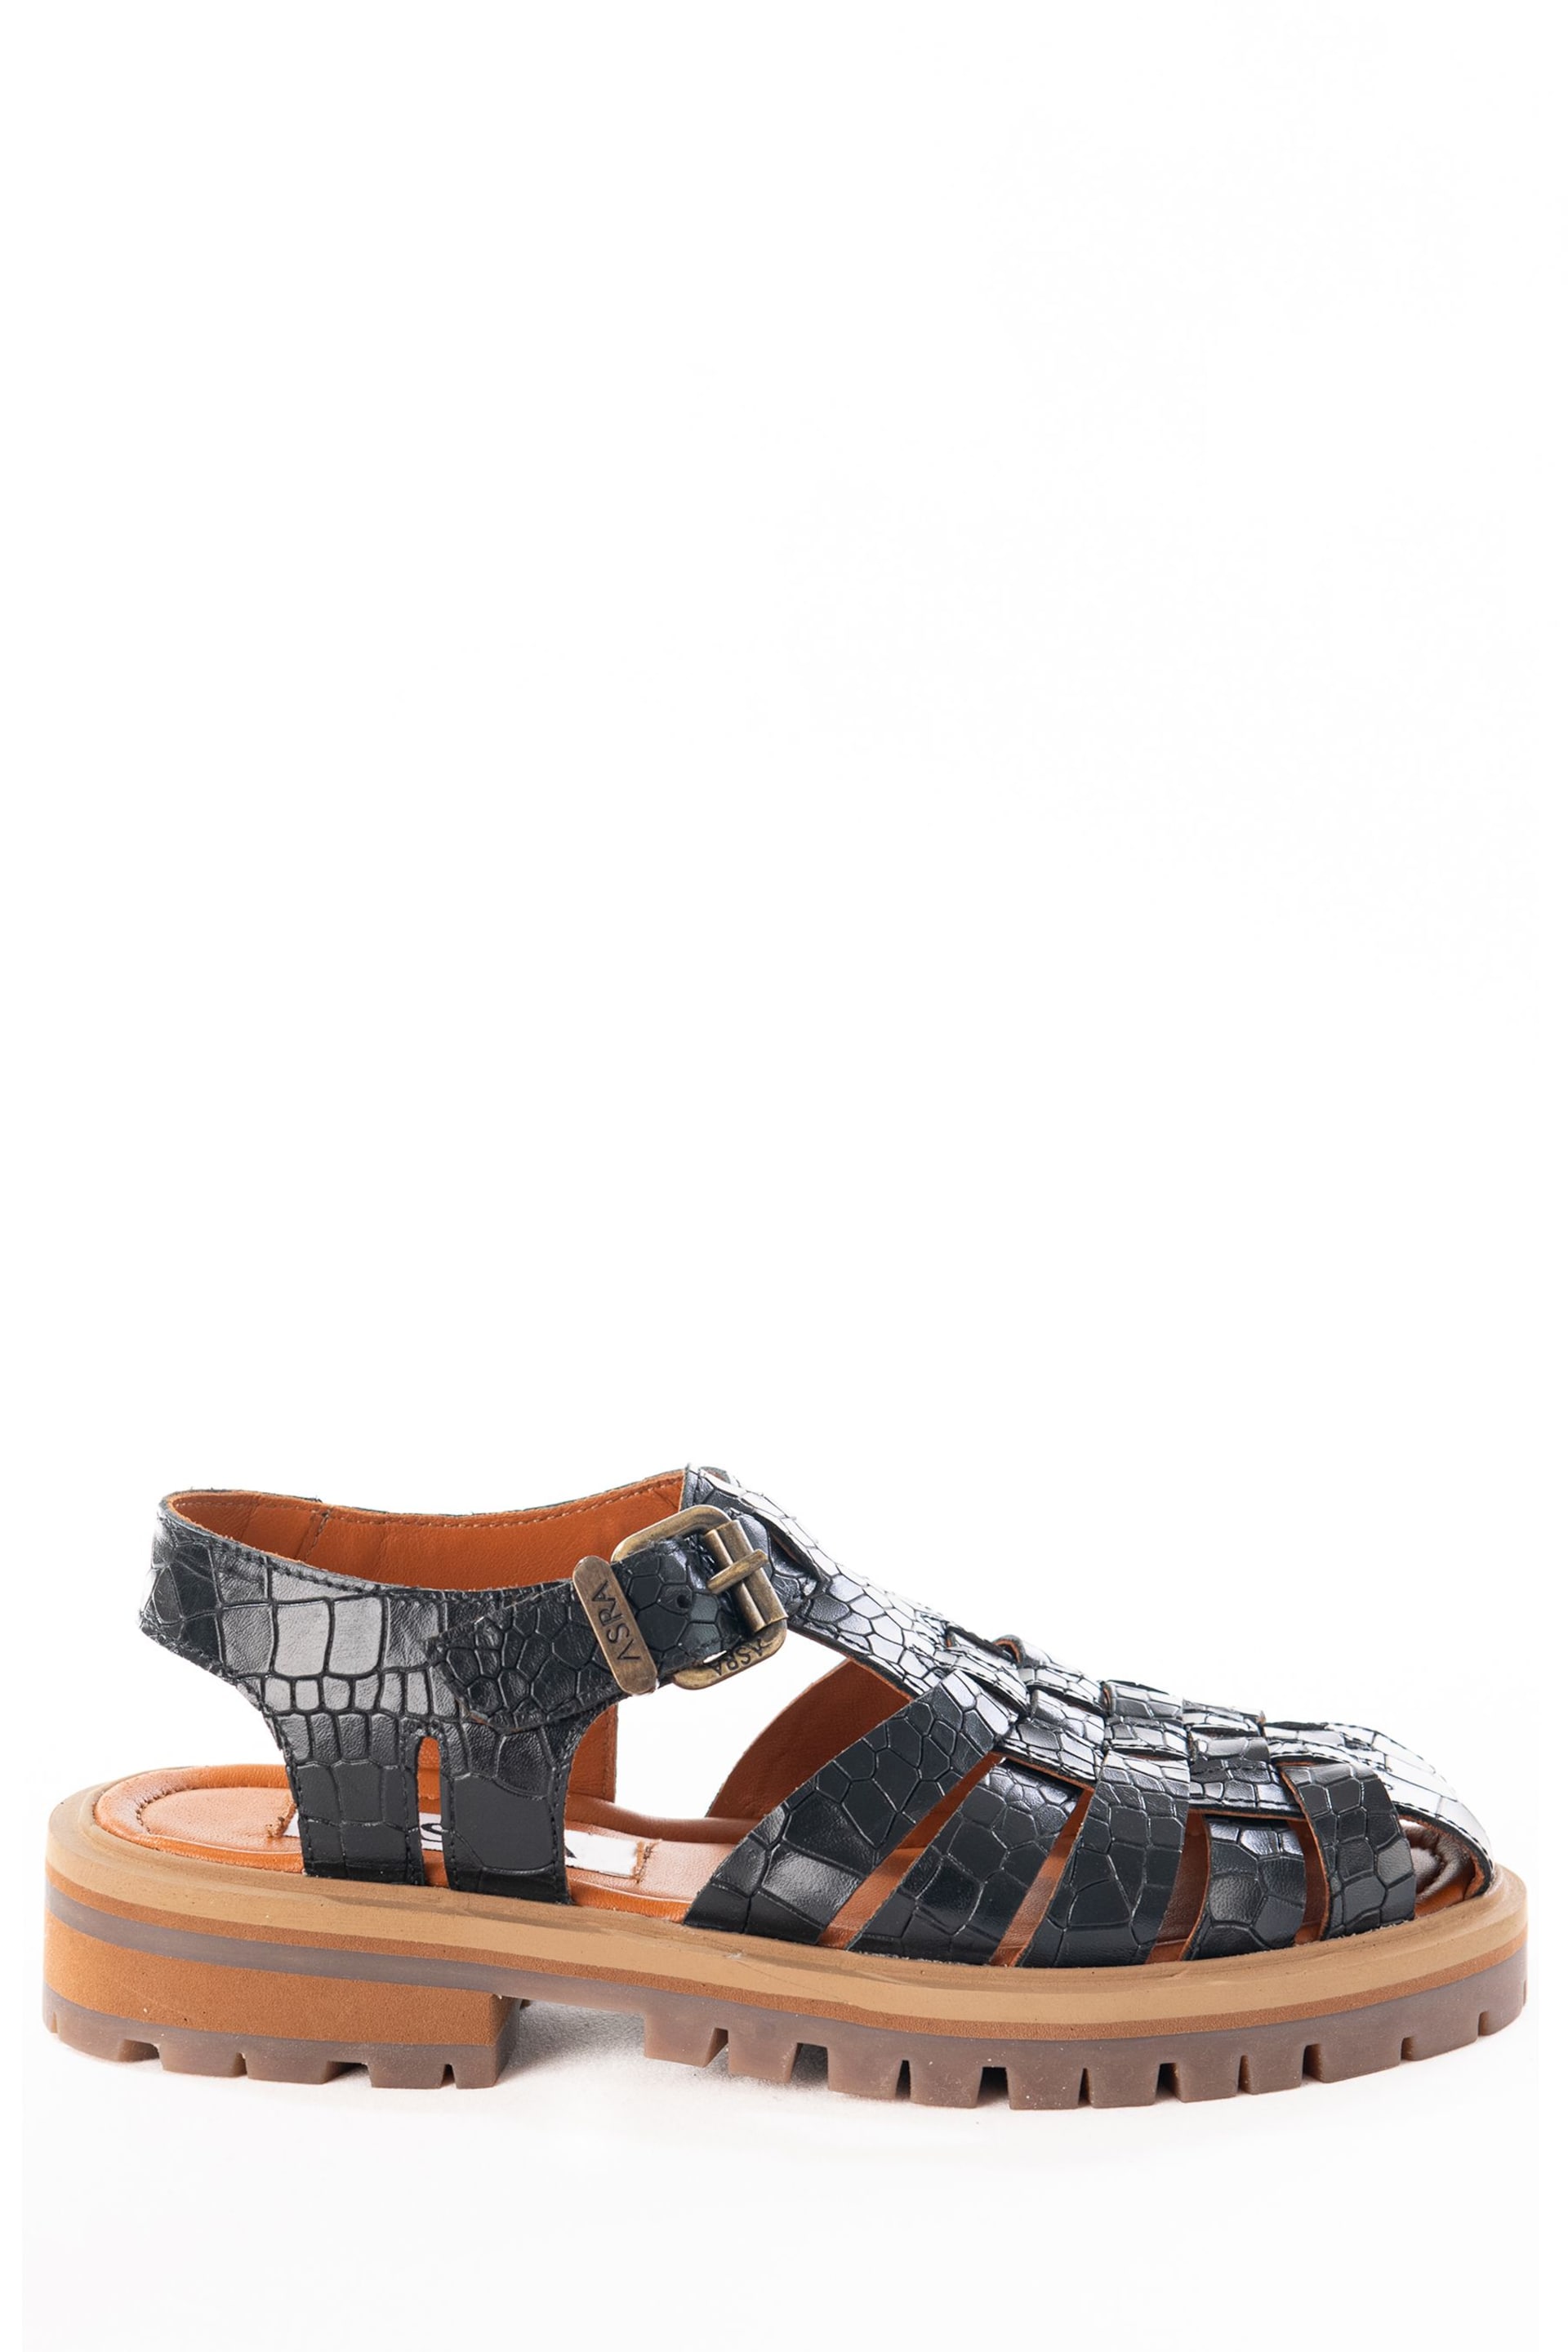 ASRA London Samo Croc Leather Gladiator Black Sandals - Image 1 of 3